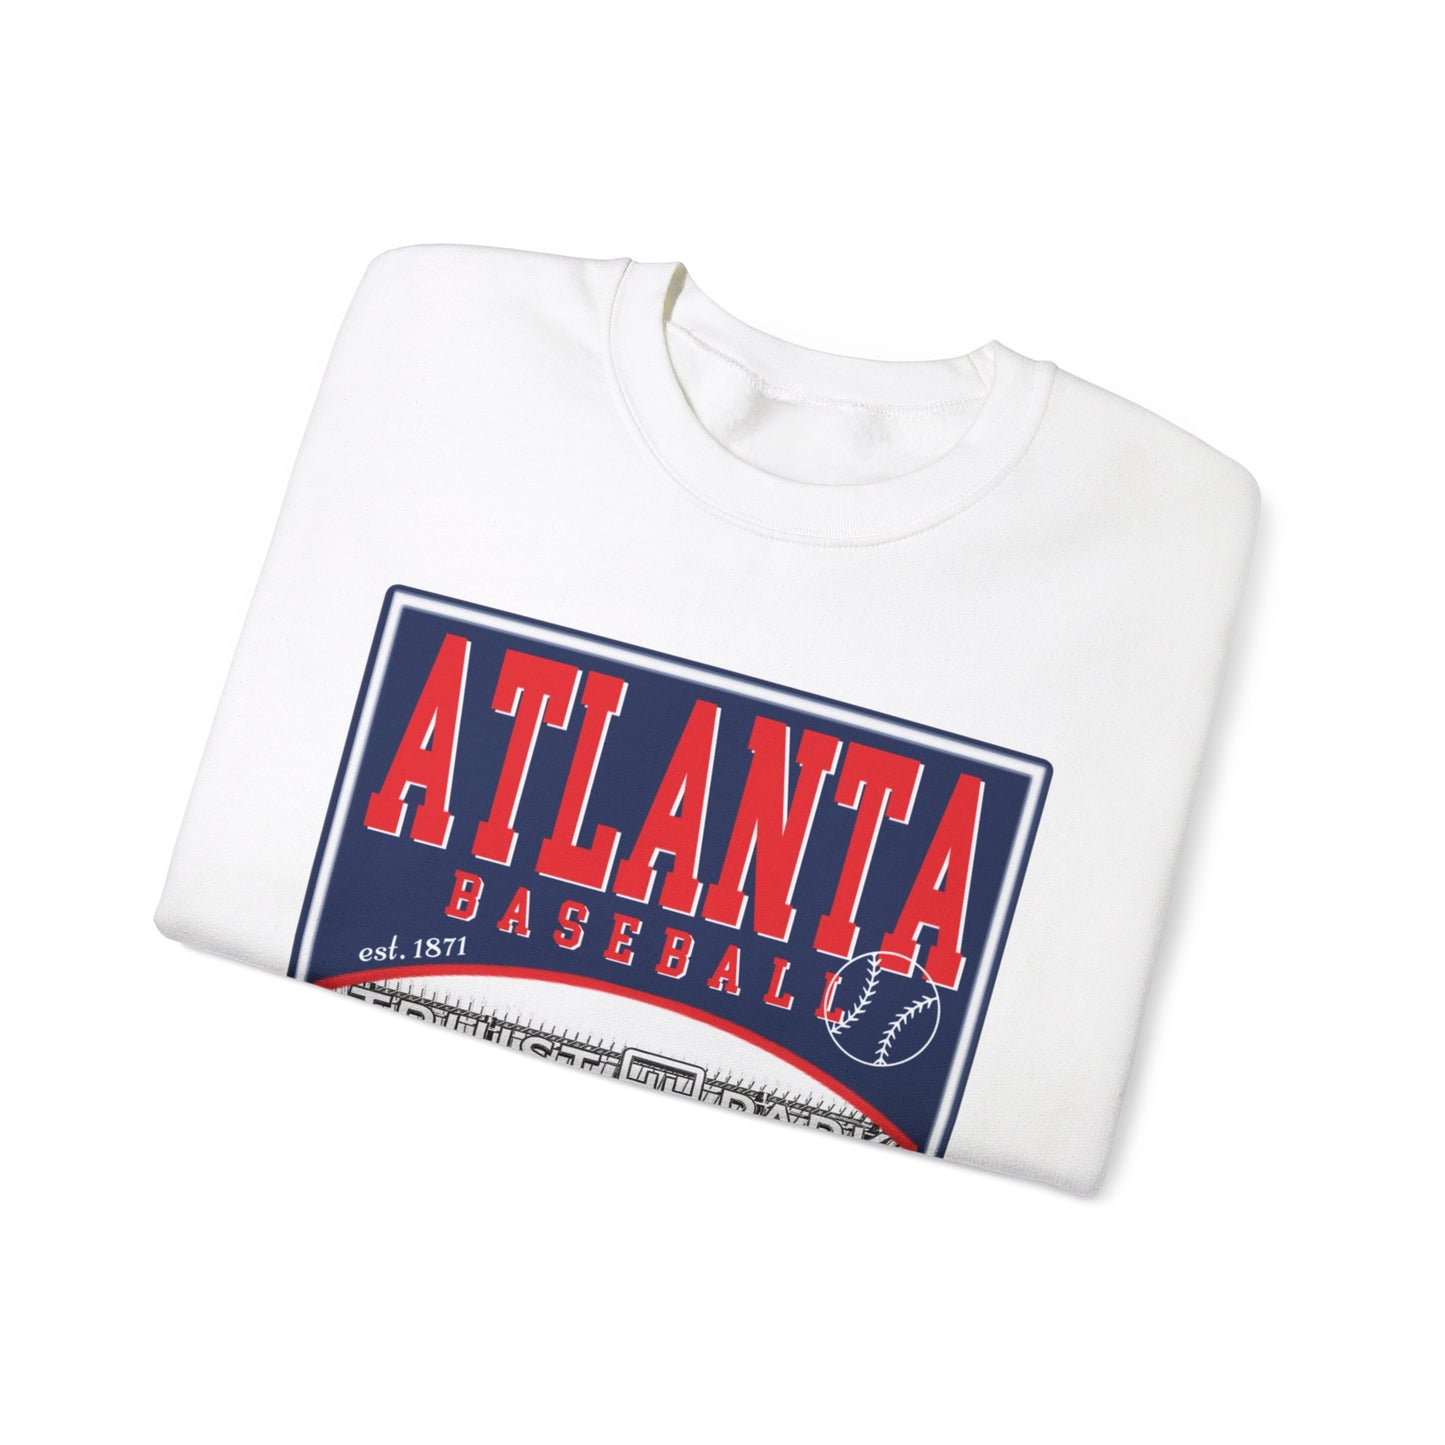 Atlanta Braves Baseball Sweatshirt